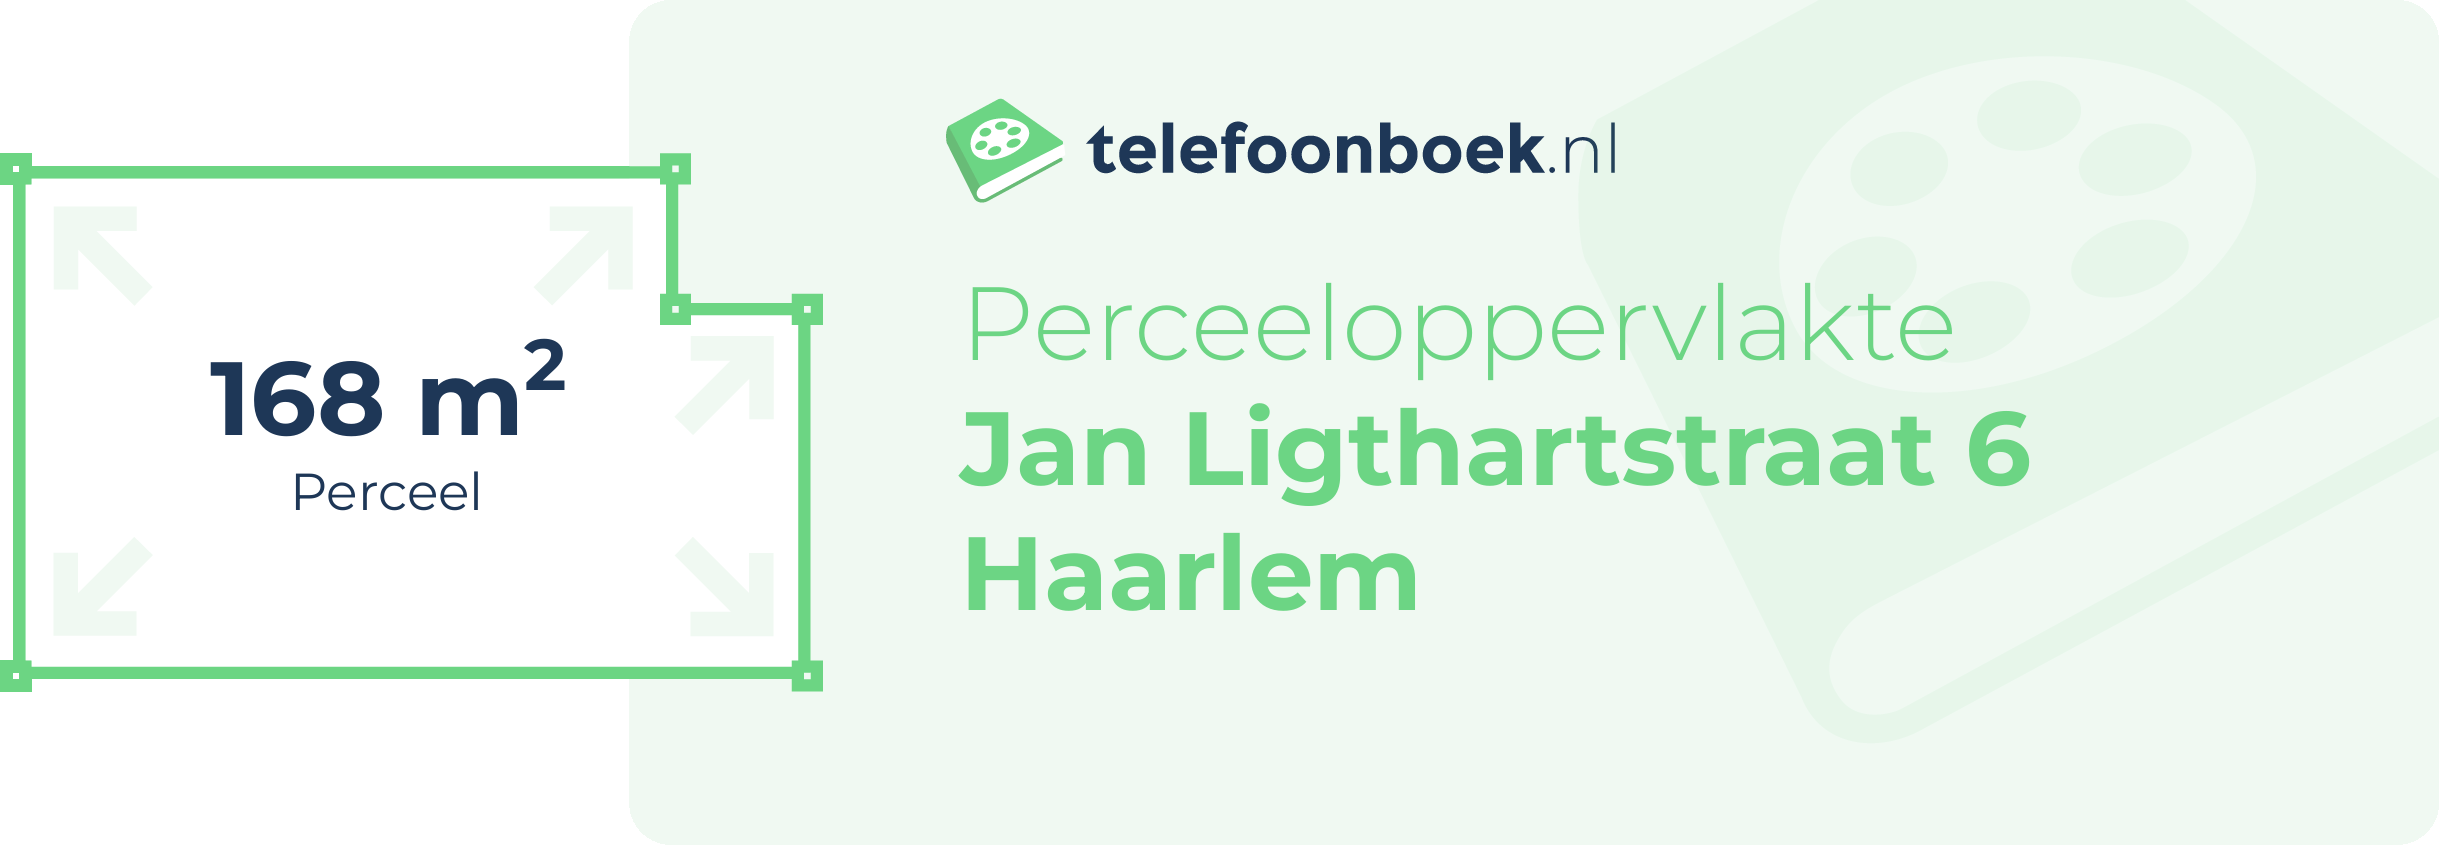 Perceeloppervlakte Jan Ligthartstraat 6 Haarlem